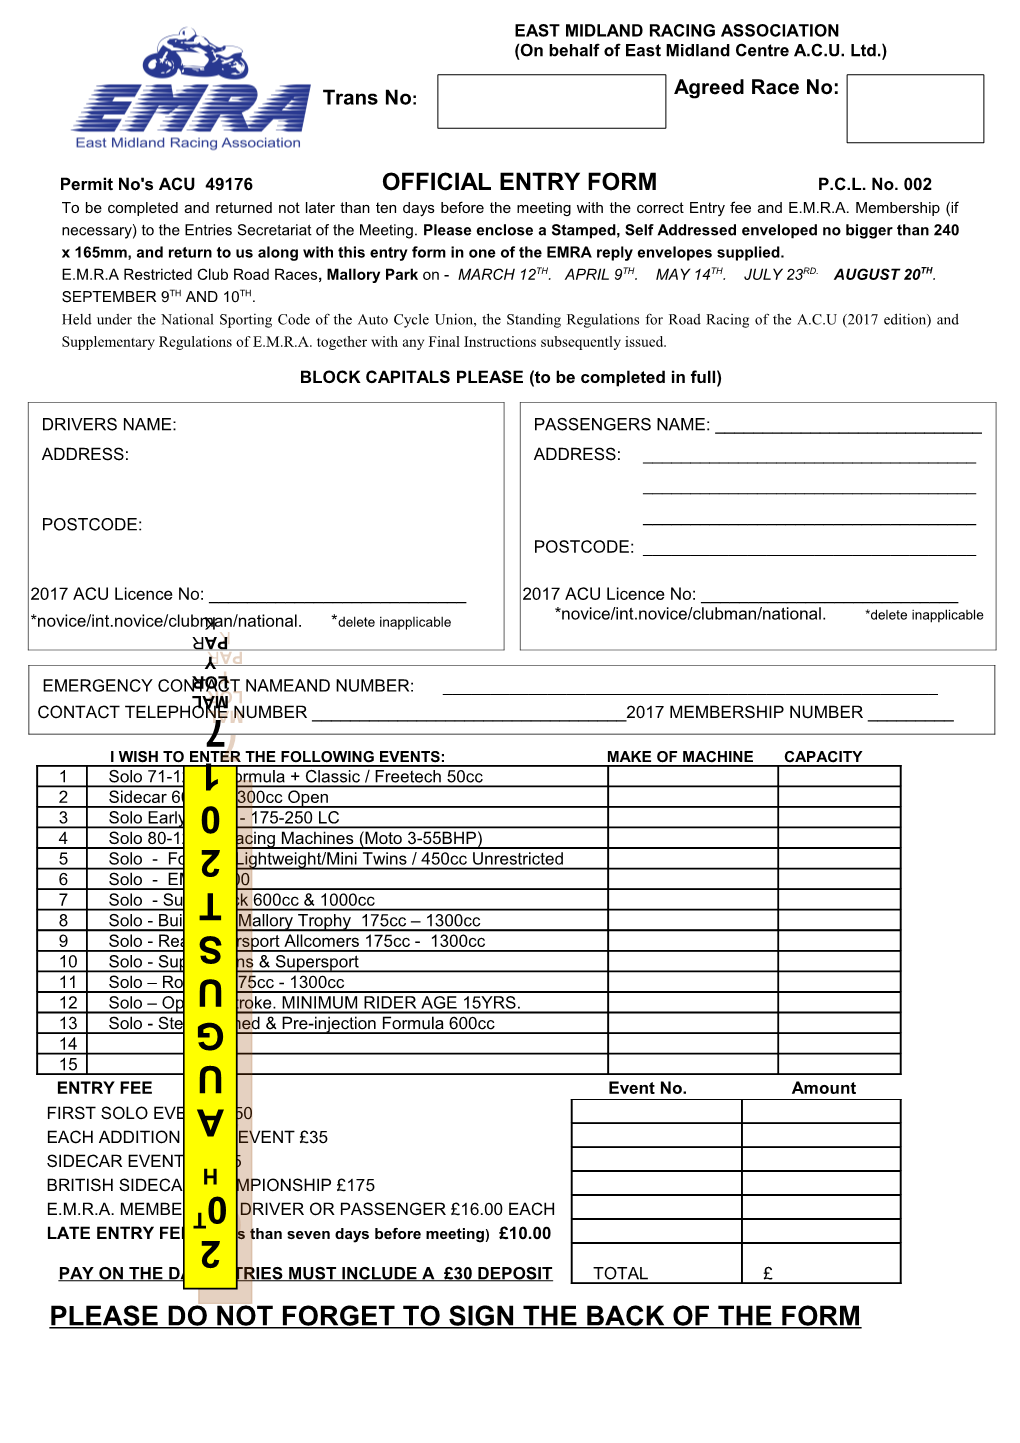 Permit No's ACU 49176 OFFICIAL ENTRY FORM P.C.L. No. 002